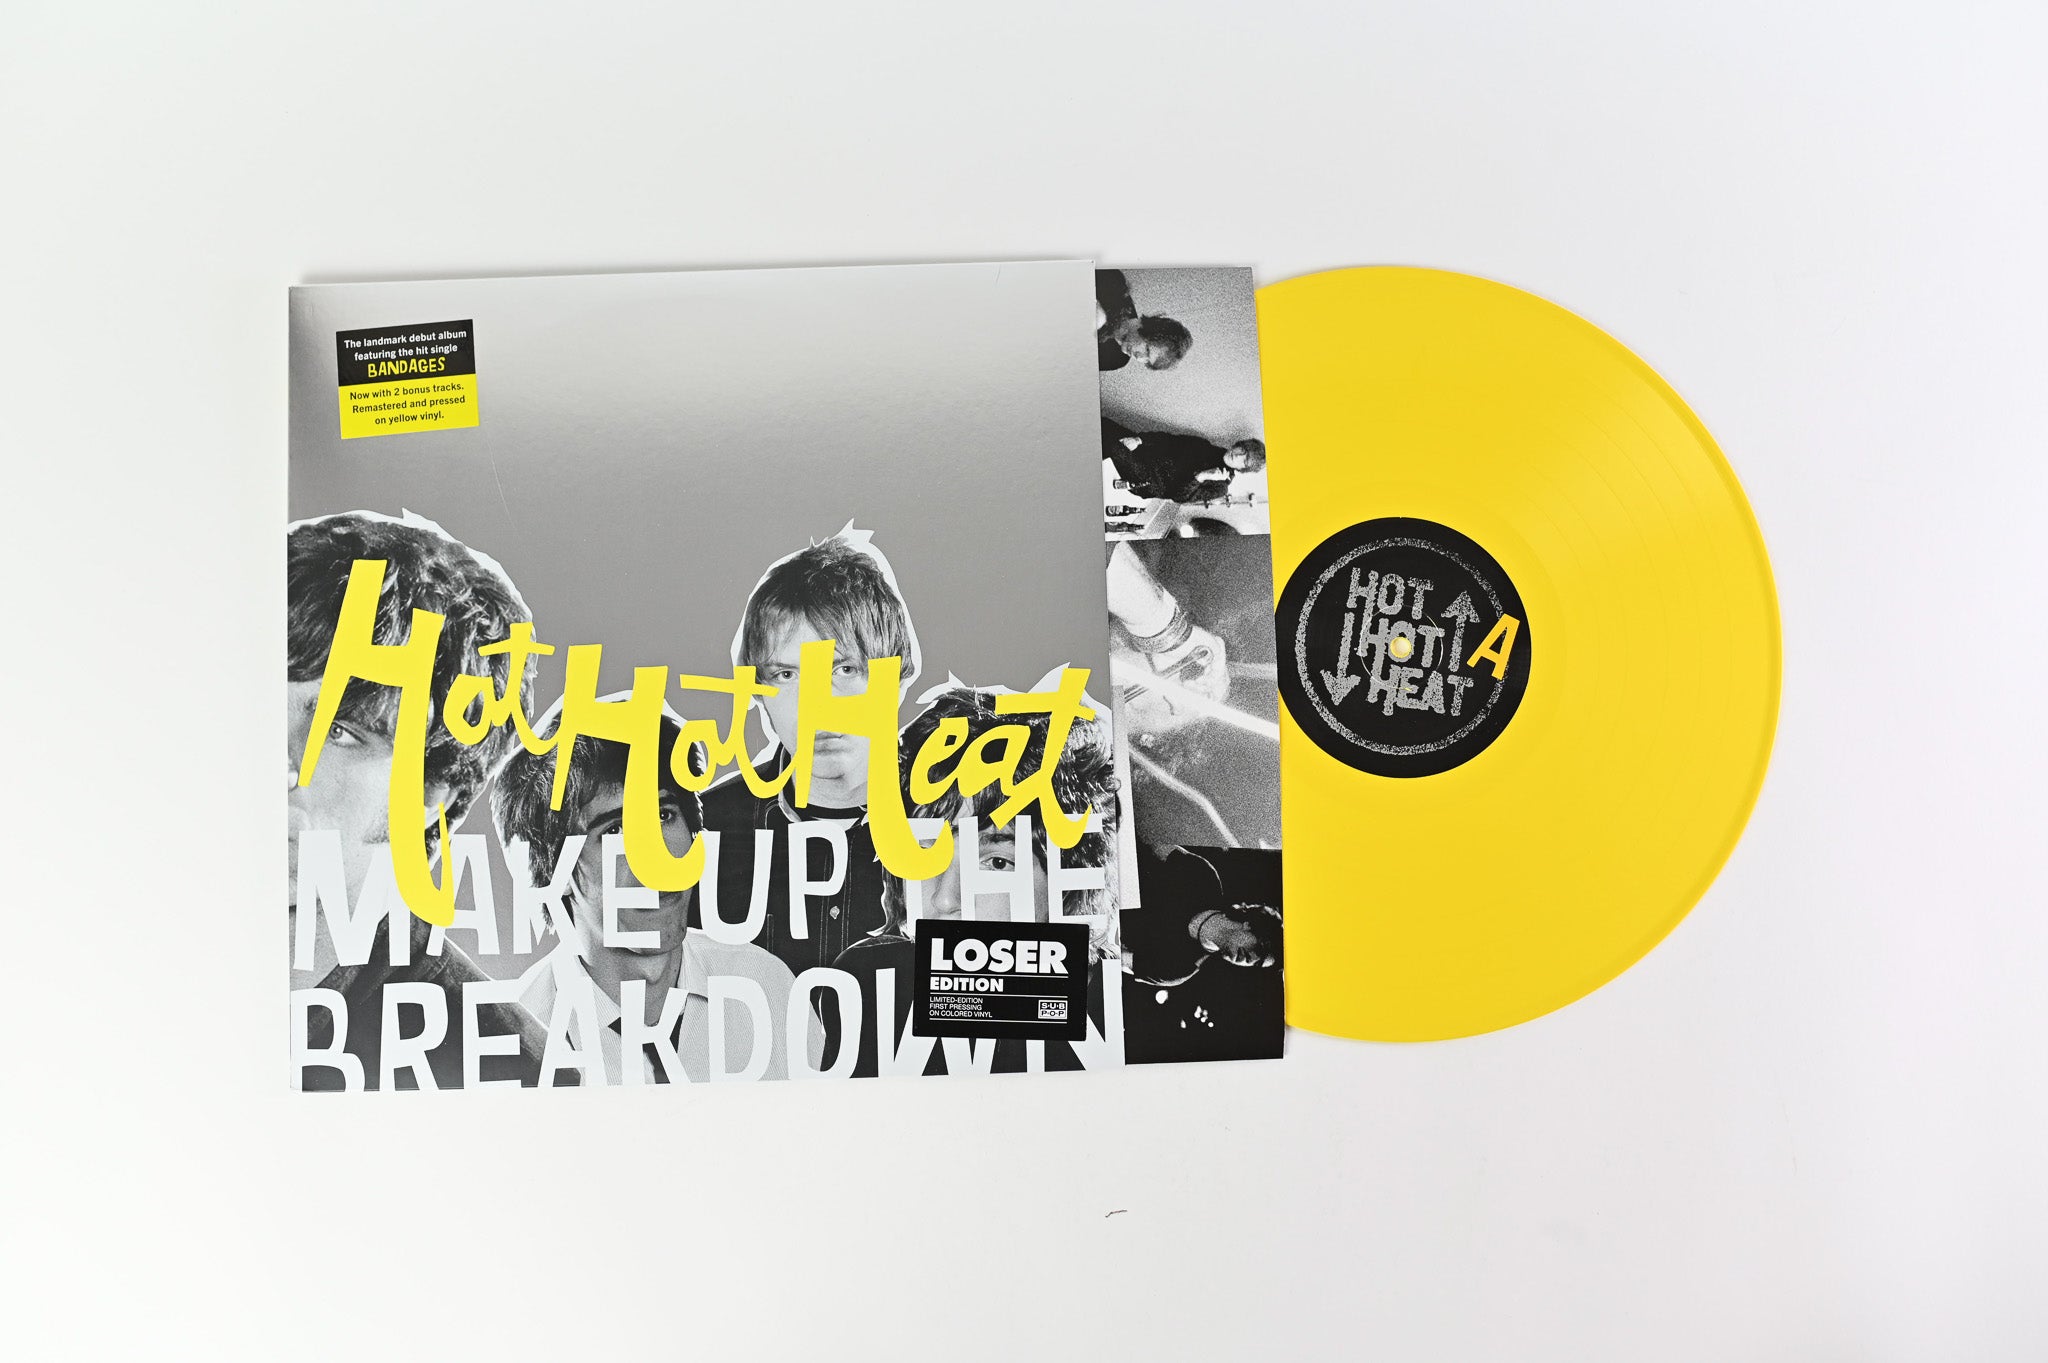 Hot Hot Heat - Make Up The Breakdown on Sub Pop - Yellow Vinyl